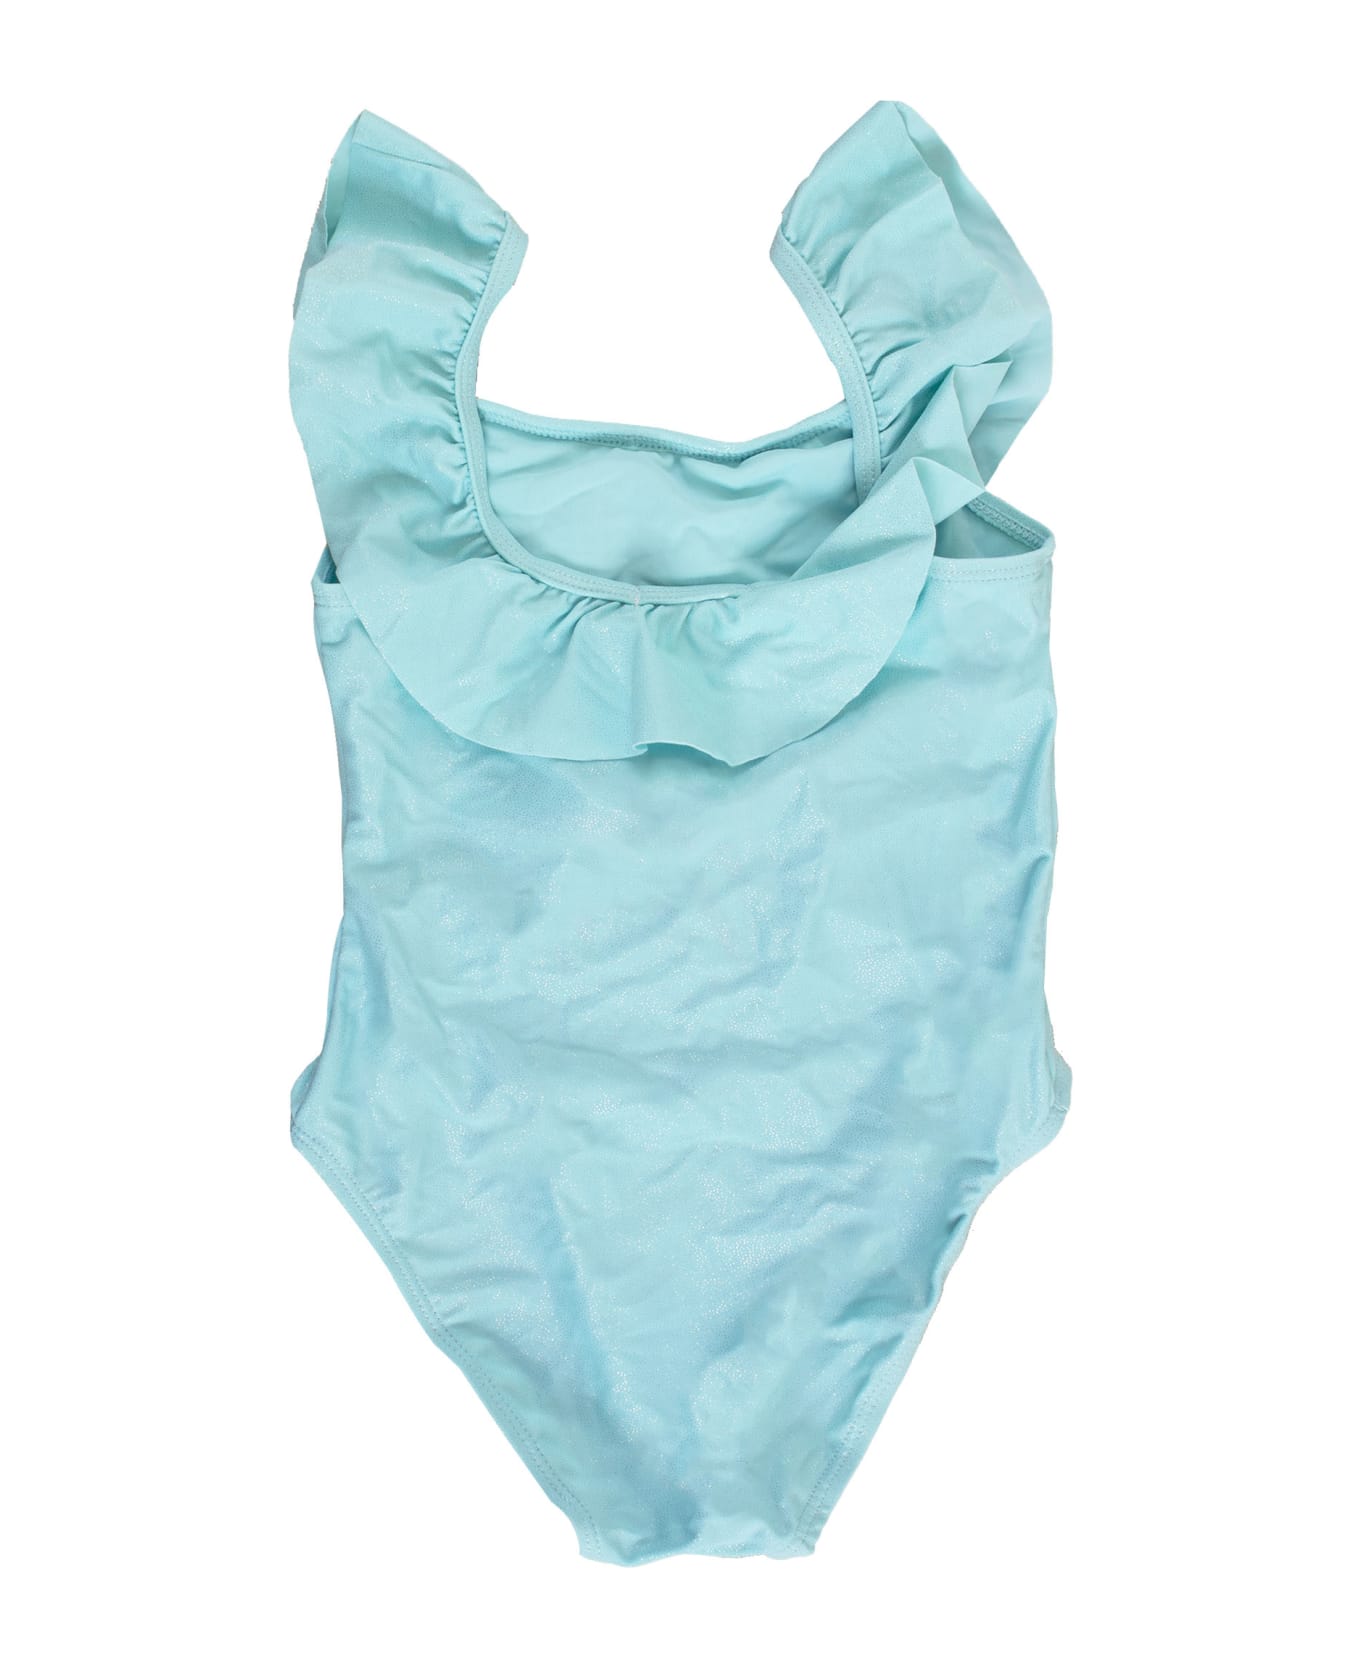 Billieblush Rainbow Swimsuit - Blue